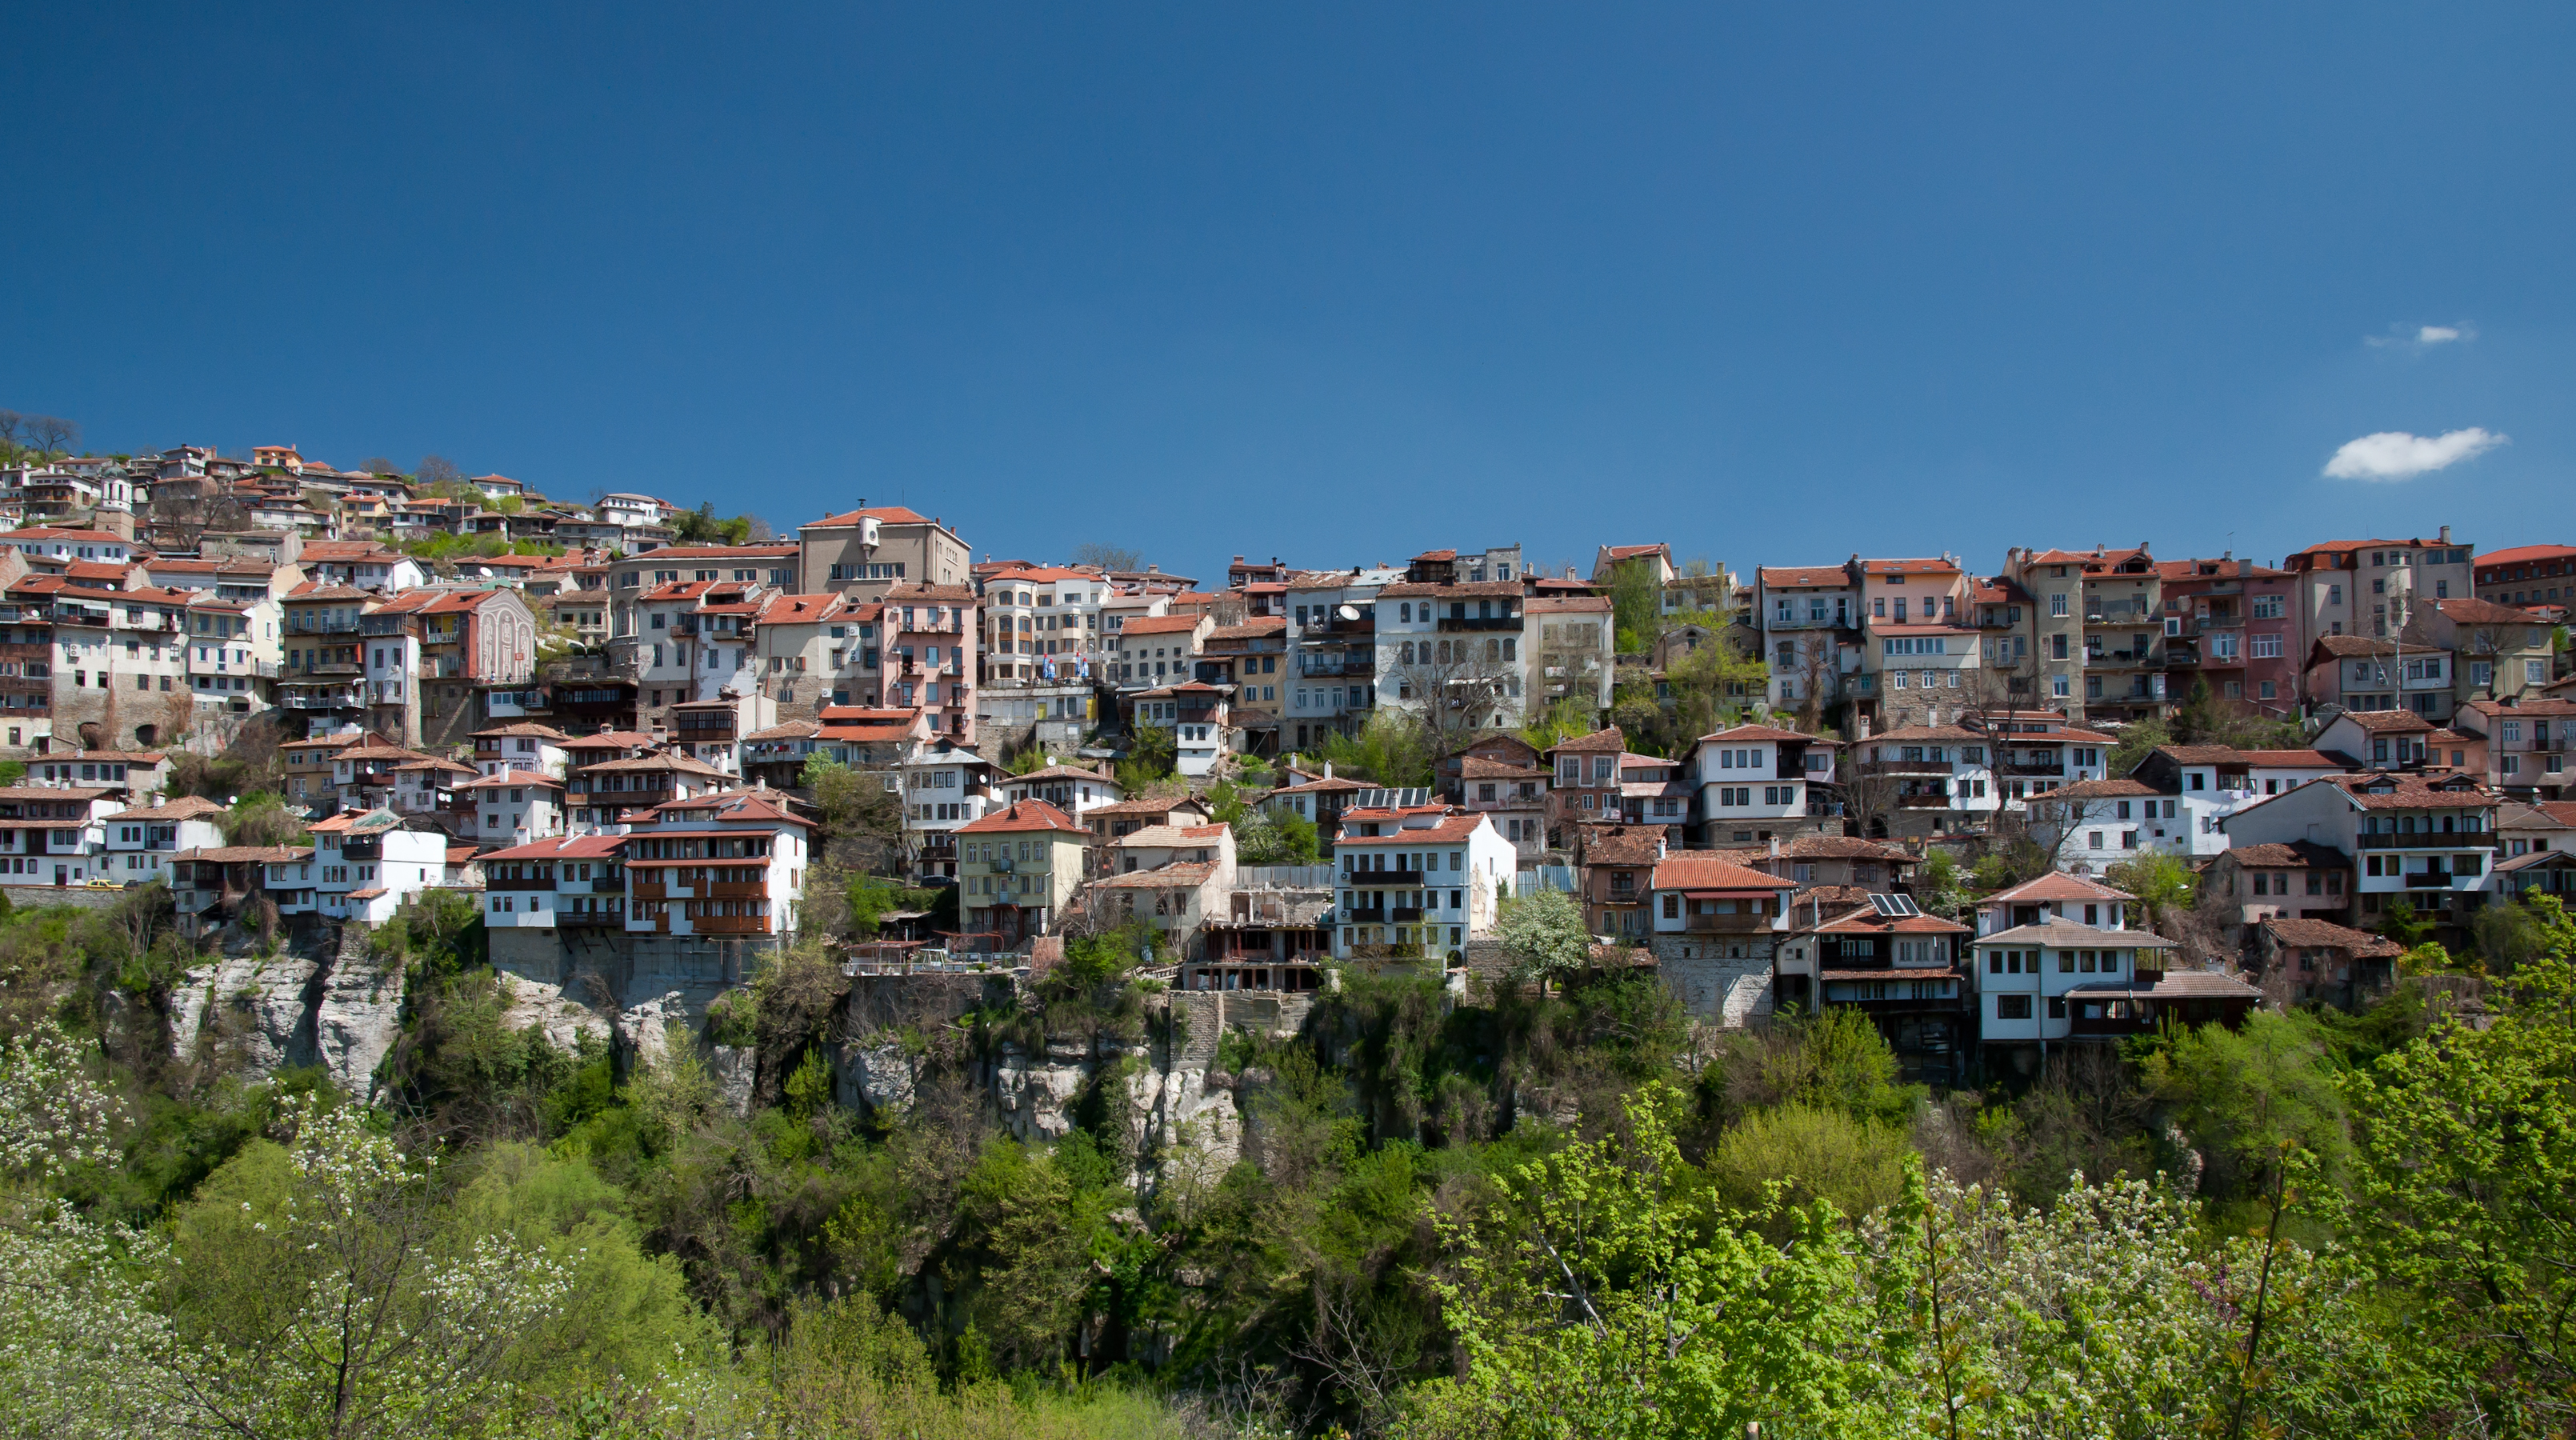 Veliko Tarnovo - Wikipedia